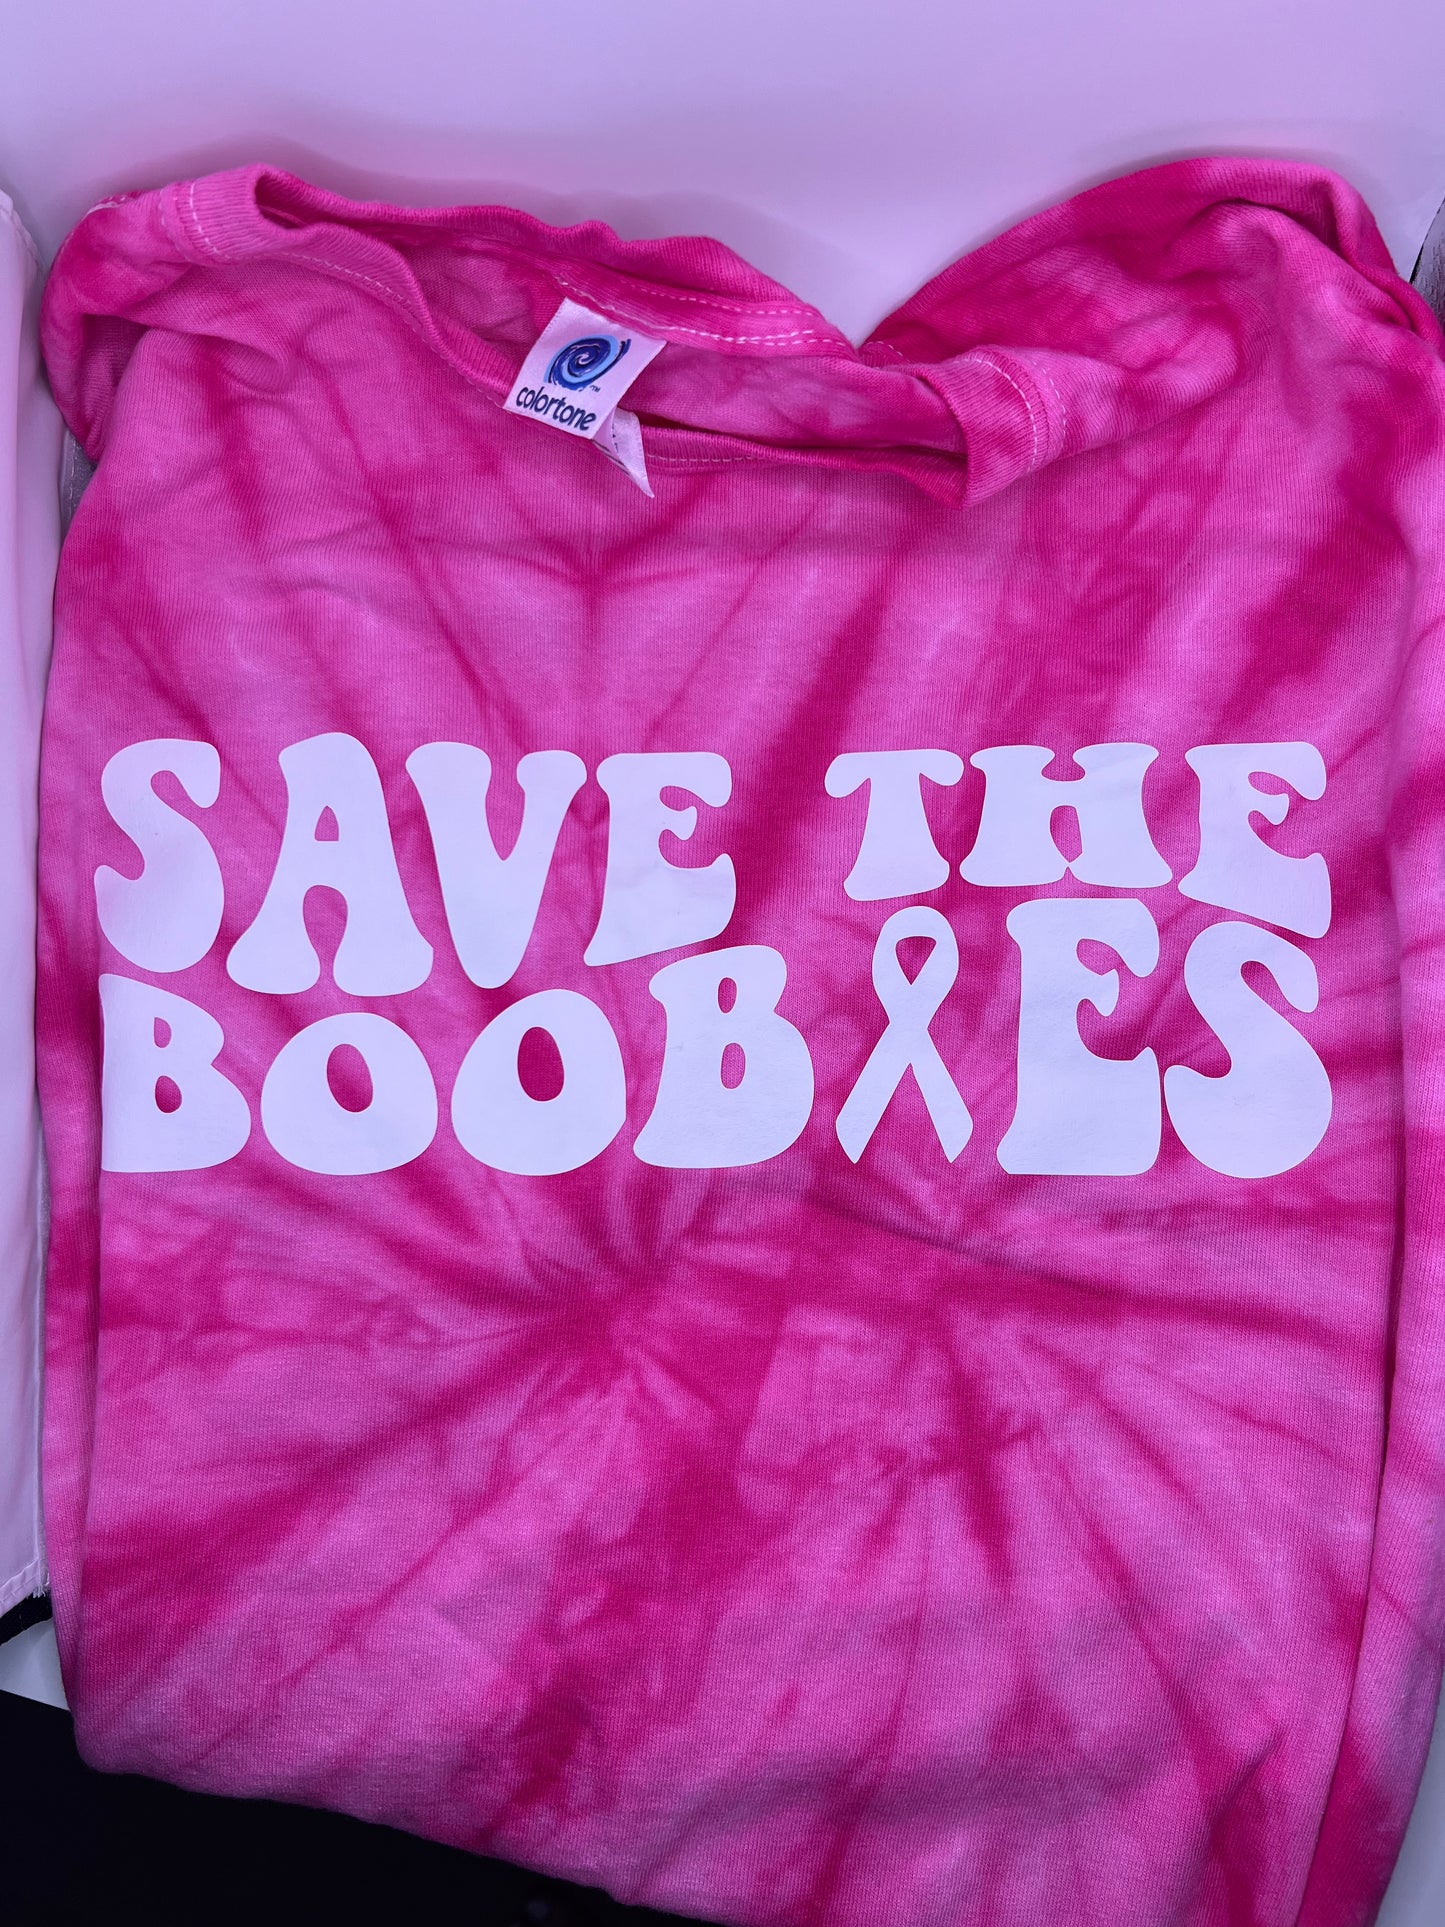 save the boobies tee